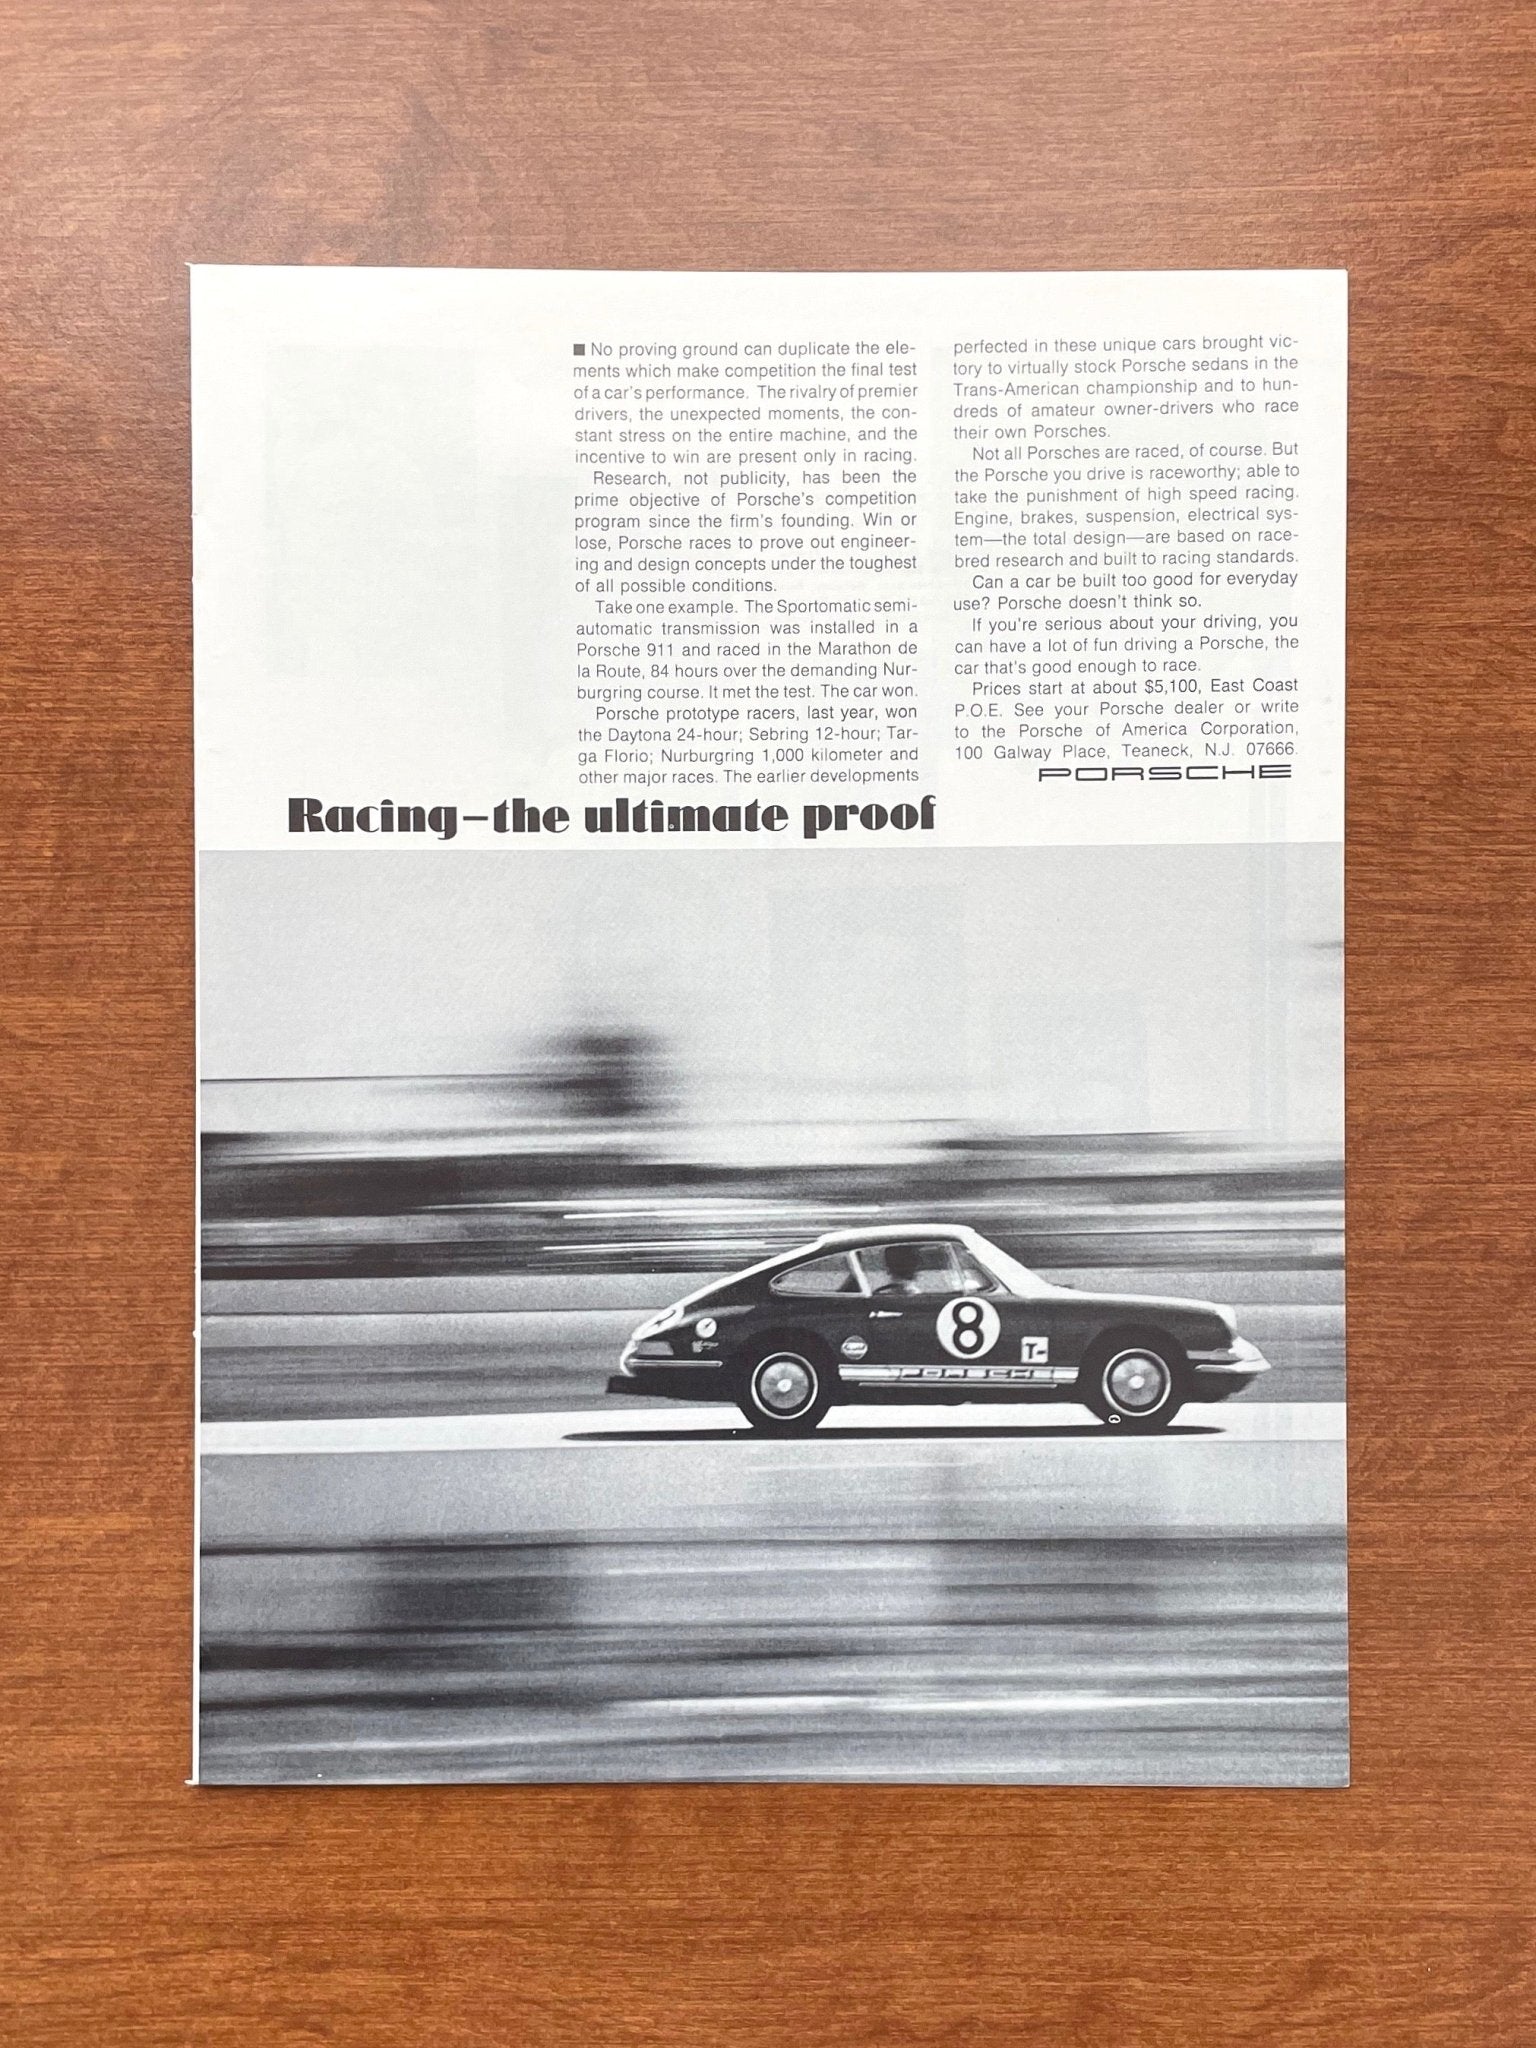 1969 Porsche 911 "Racing - the ultimate proof" in B/W Advertisement